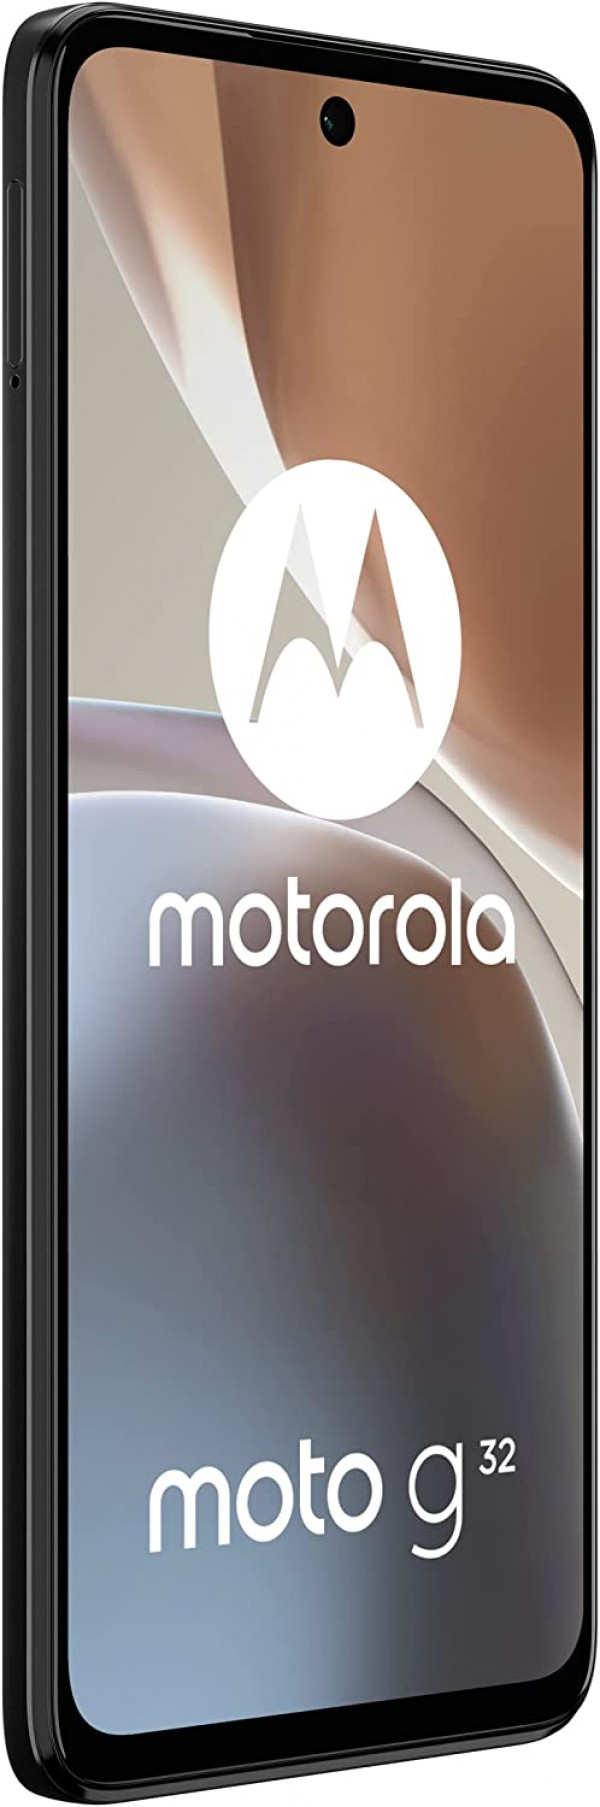 Motorola g32 Mineral Grey